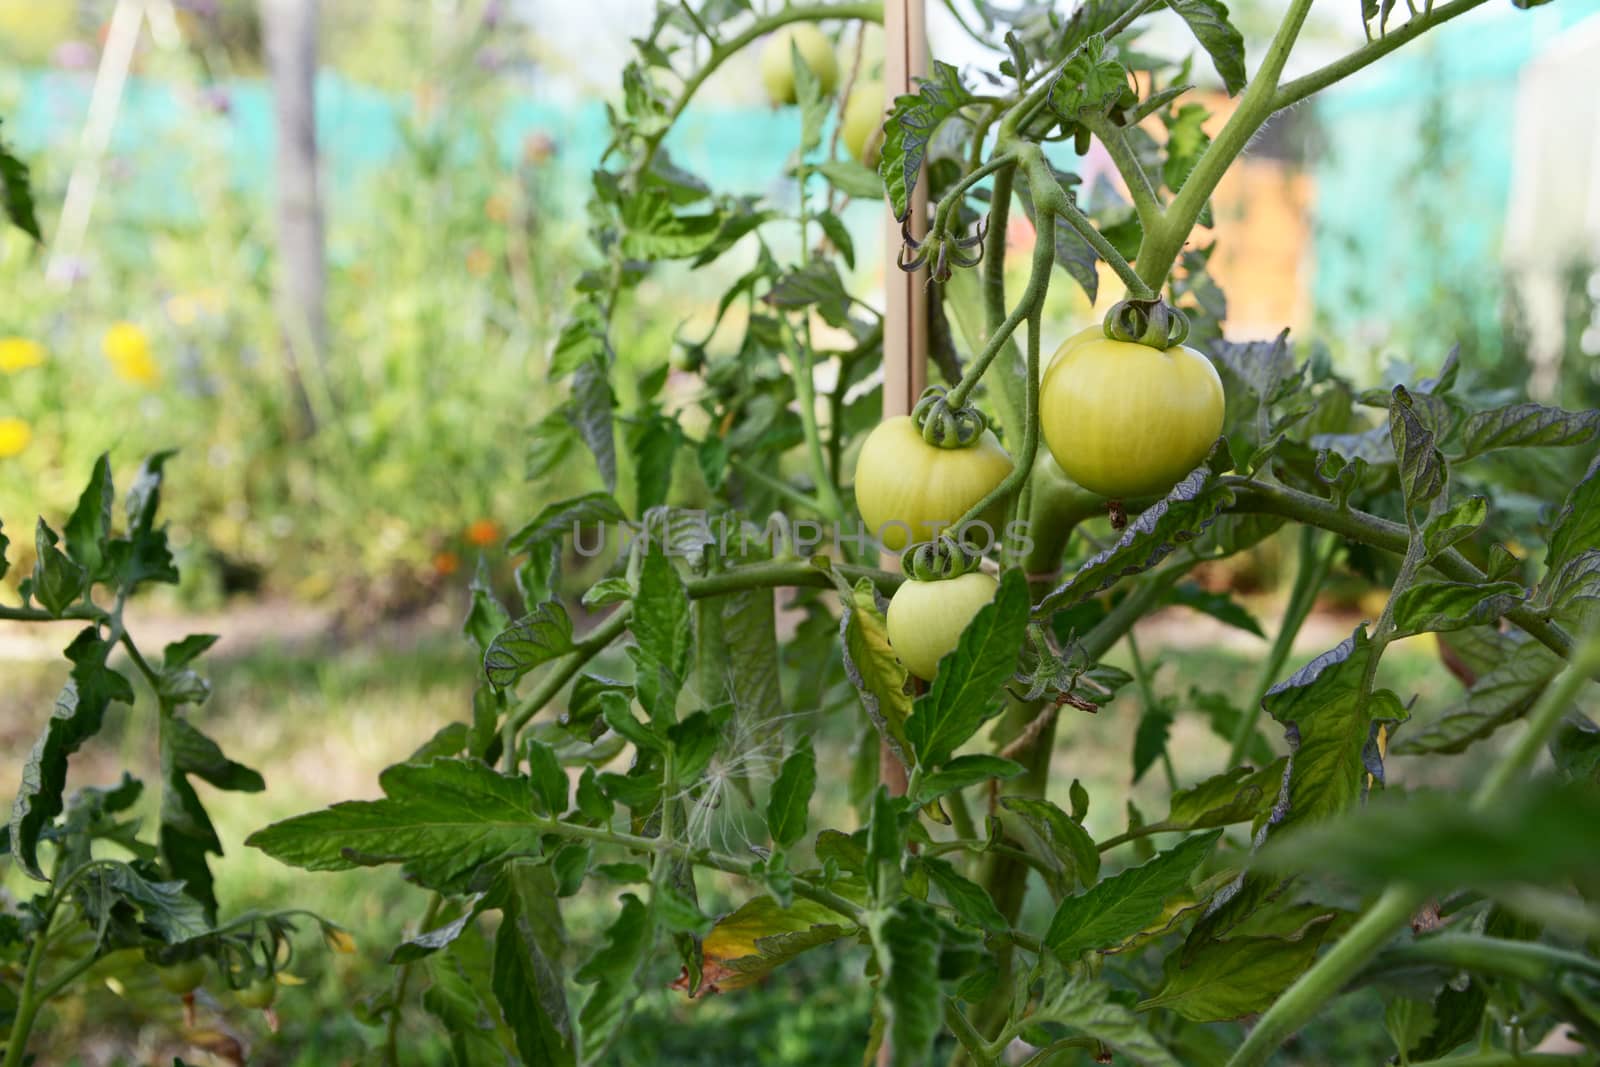 Three Ferline tomato fruits grow among fragrant foliage on a cor by sarahdoow